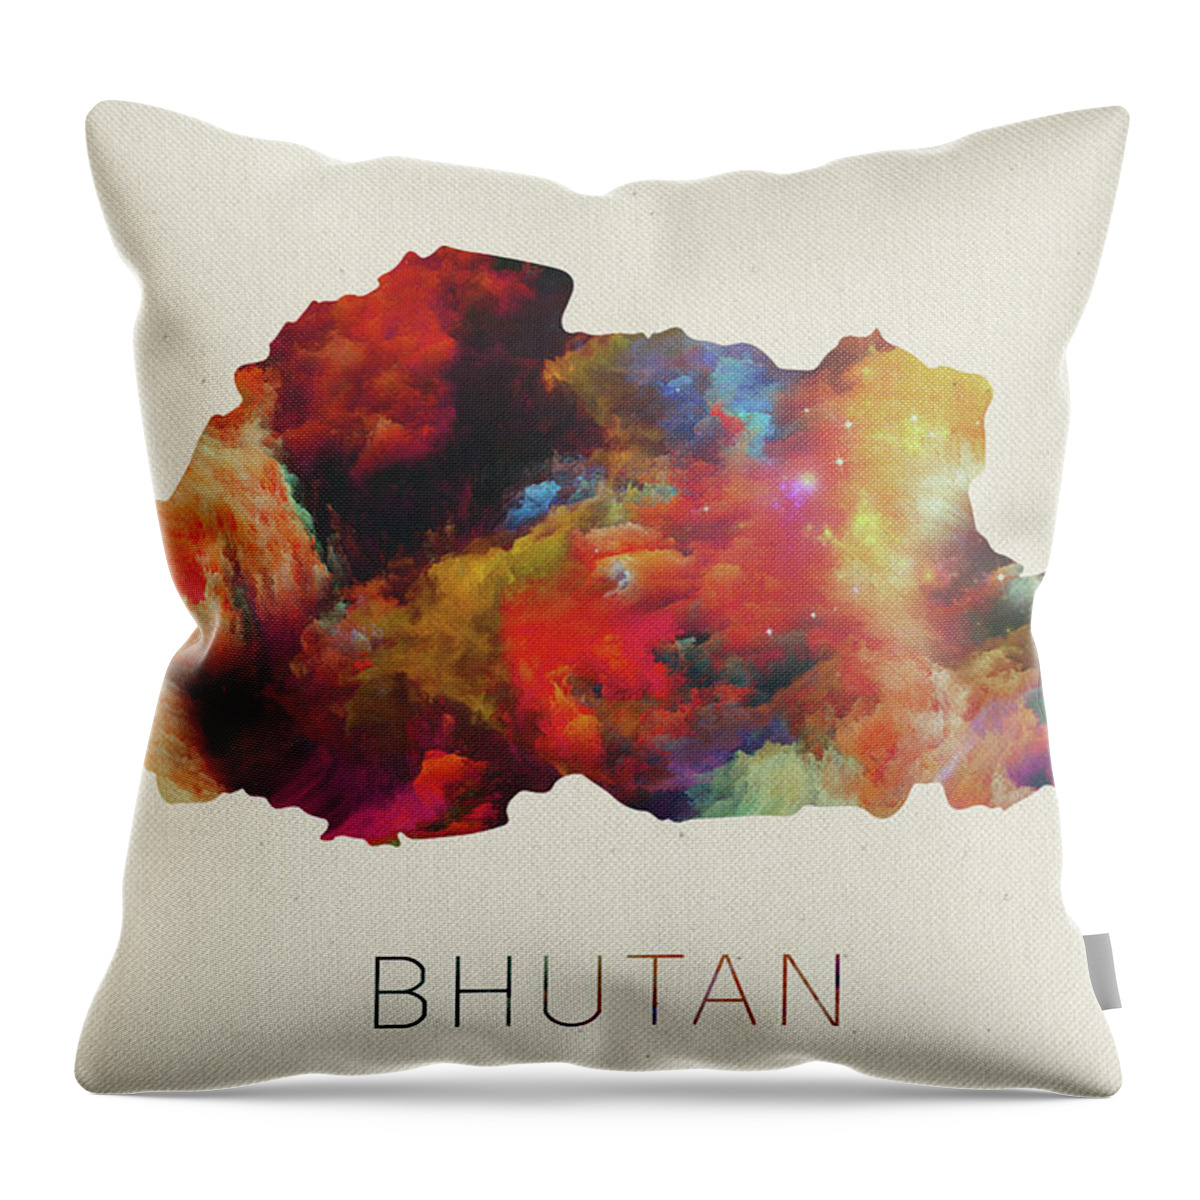 Bhutan Throw Pillow featuring the mixed media Bhutan Watercolor Map by Design Turnpike